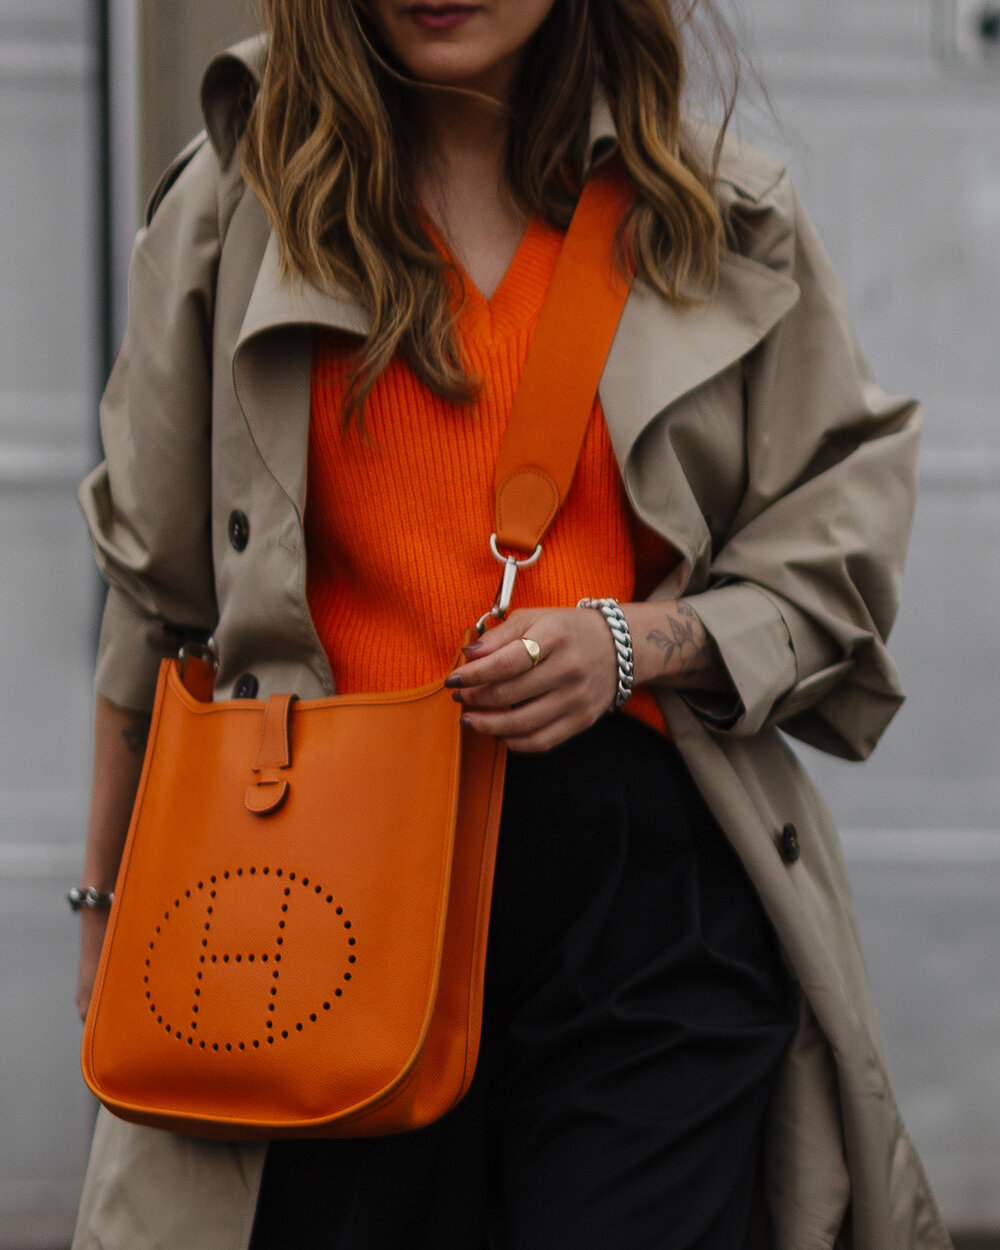 How to wear orange and still look chic_1092.jpg